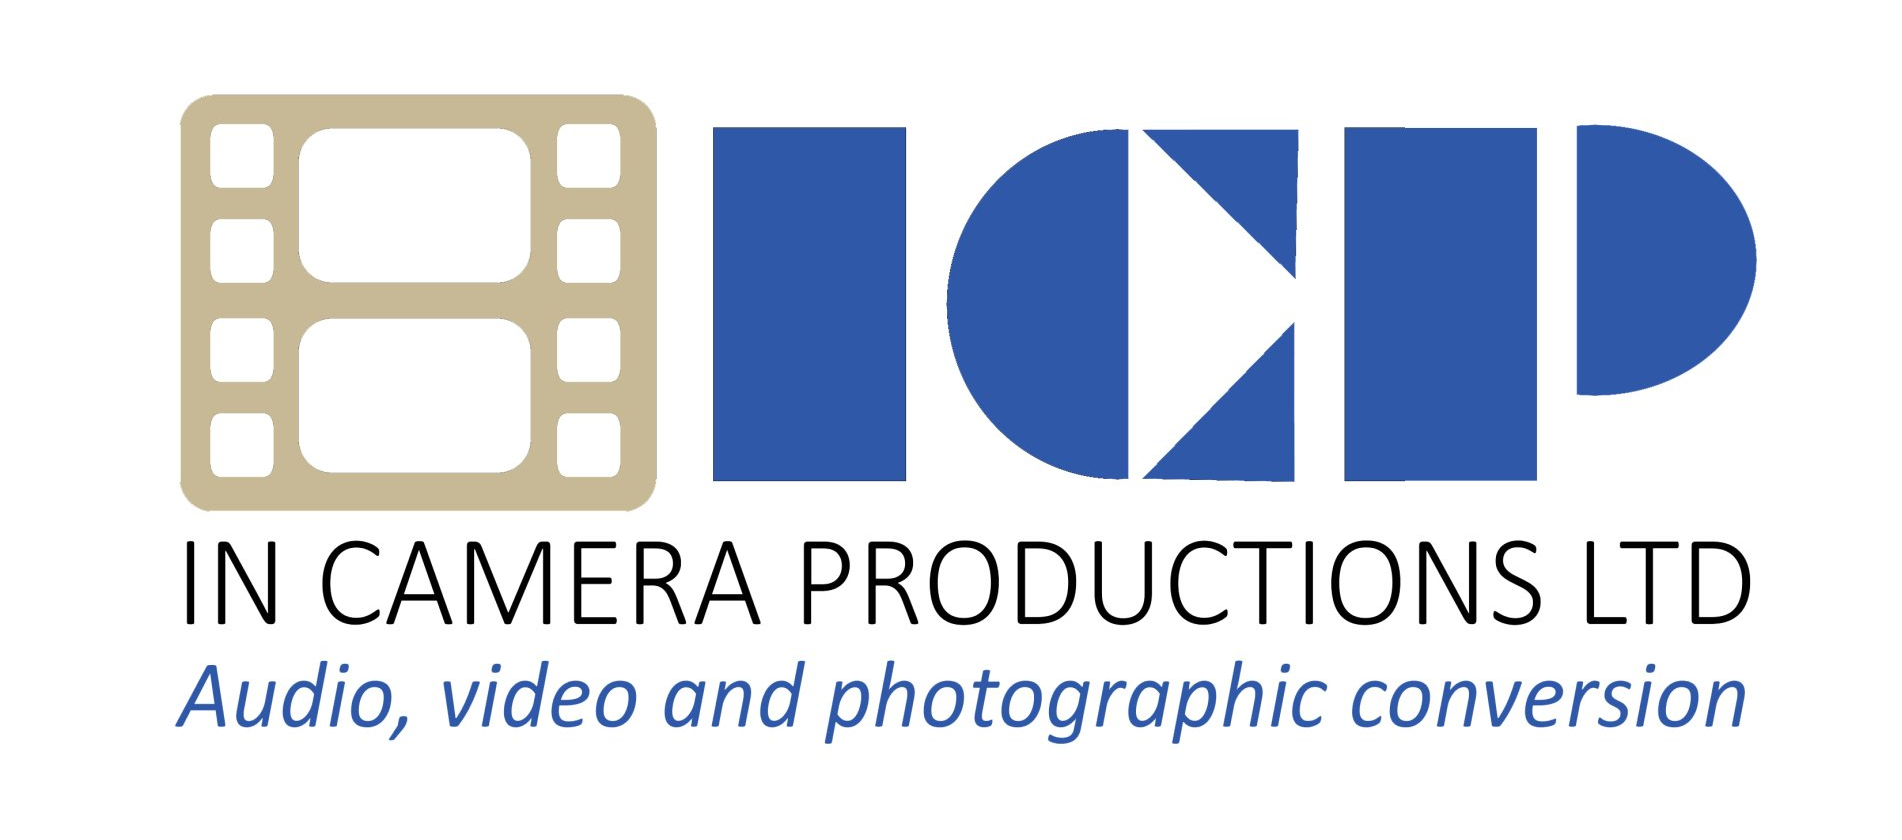 In Camera Productions Ltd logo